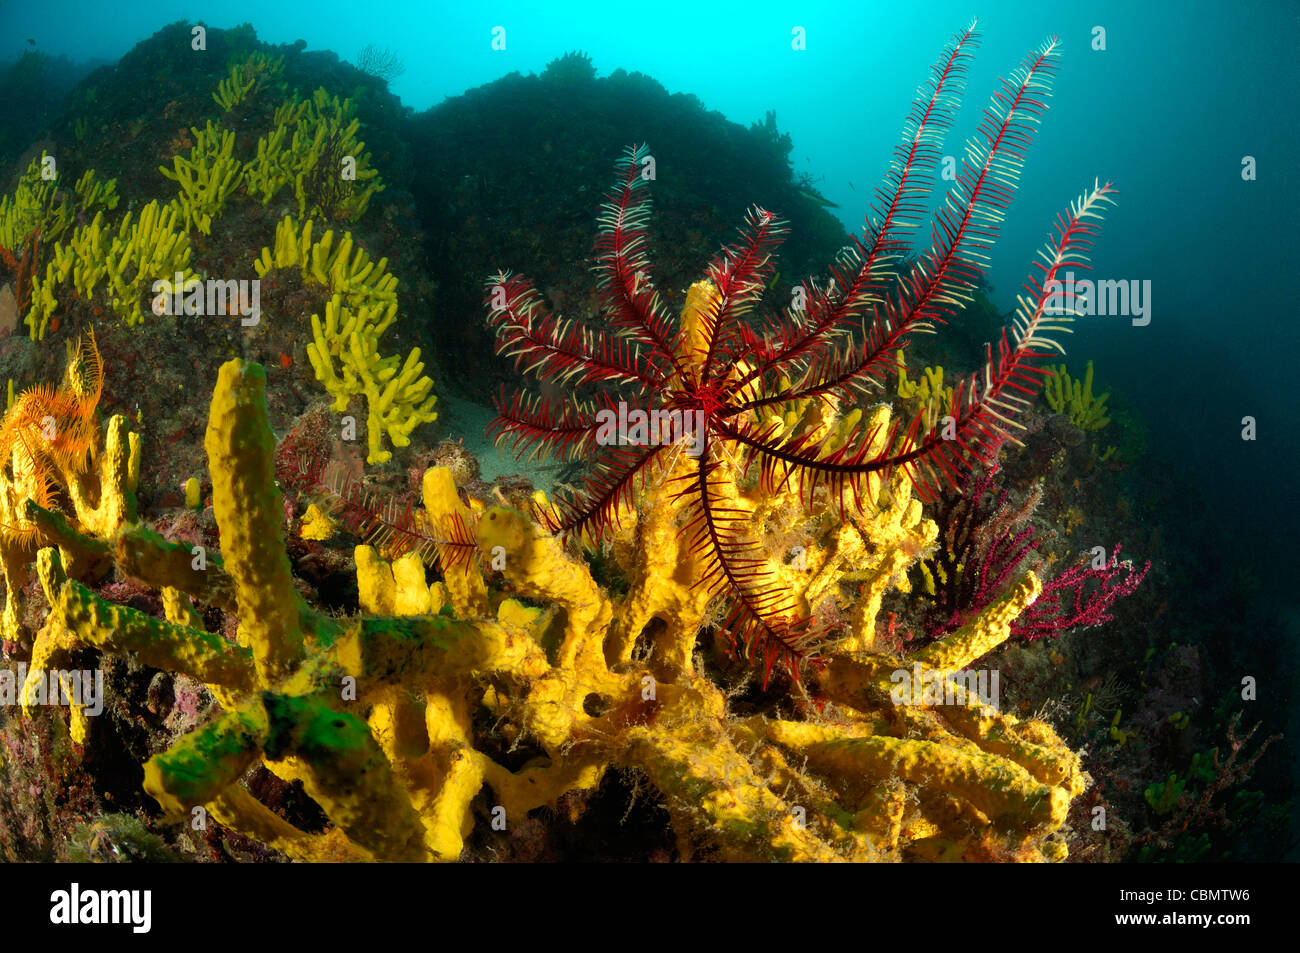 Red Mediterranean Crinoid on Golden Sponge, Antedon mediterranea, Verongia aerophoba, Cres Island, Adriatic Sea, Croatia Stock Photo